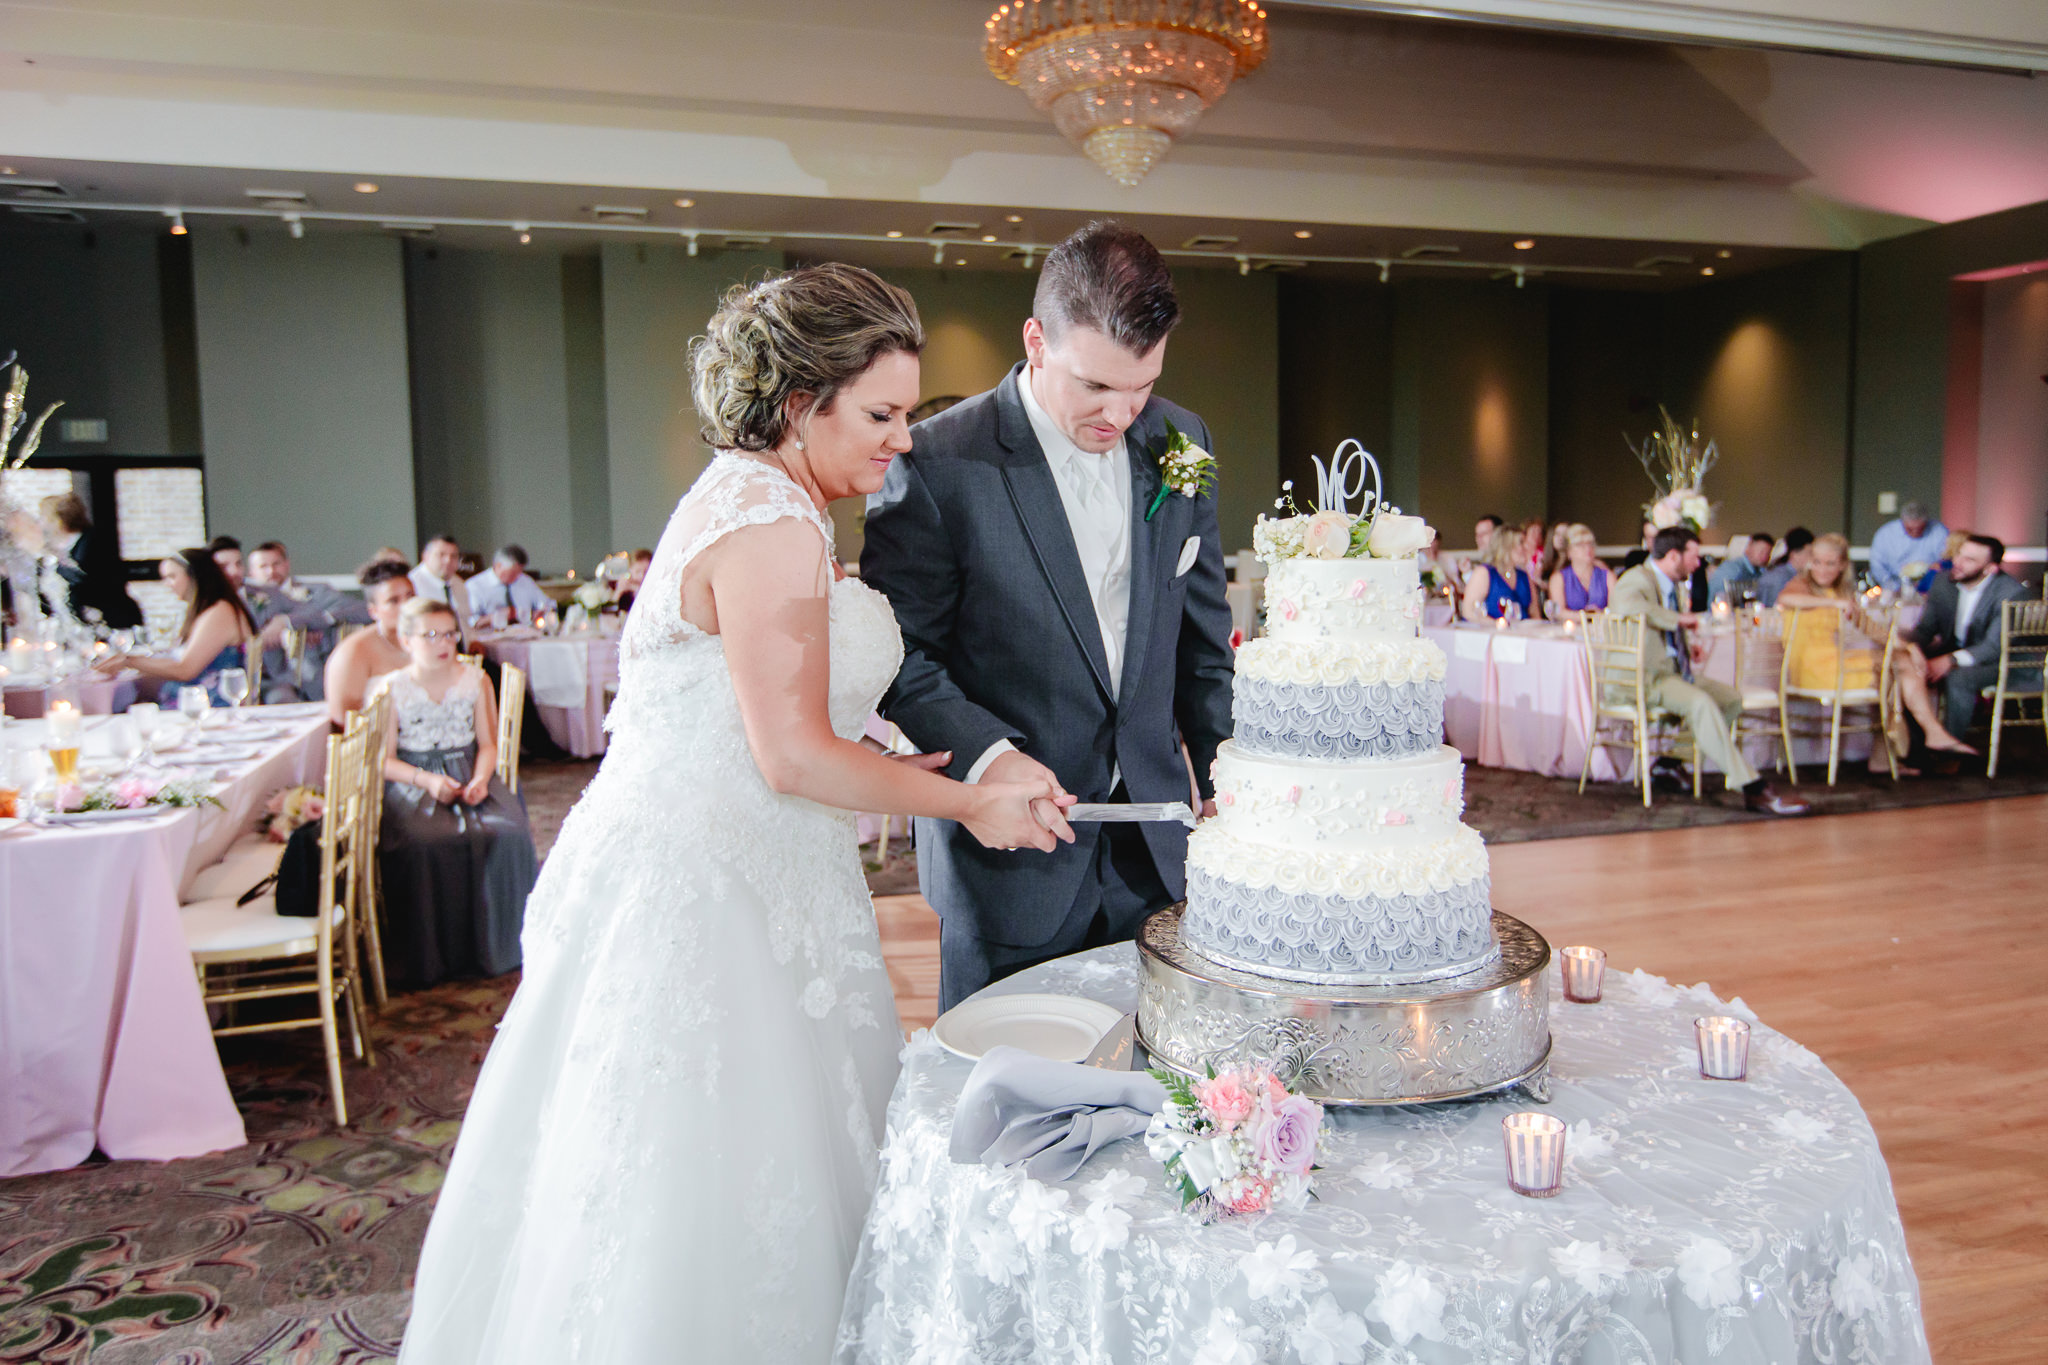 Cake cutting at a Chestnut Ridge Golf Resort wedding